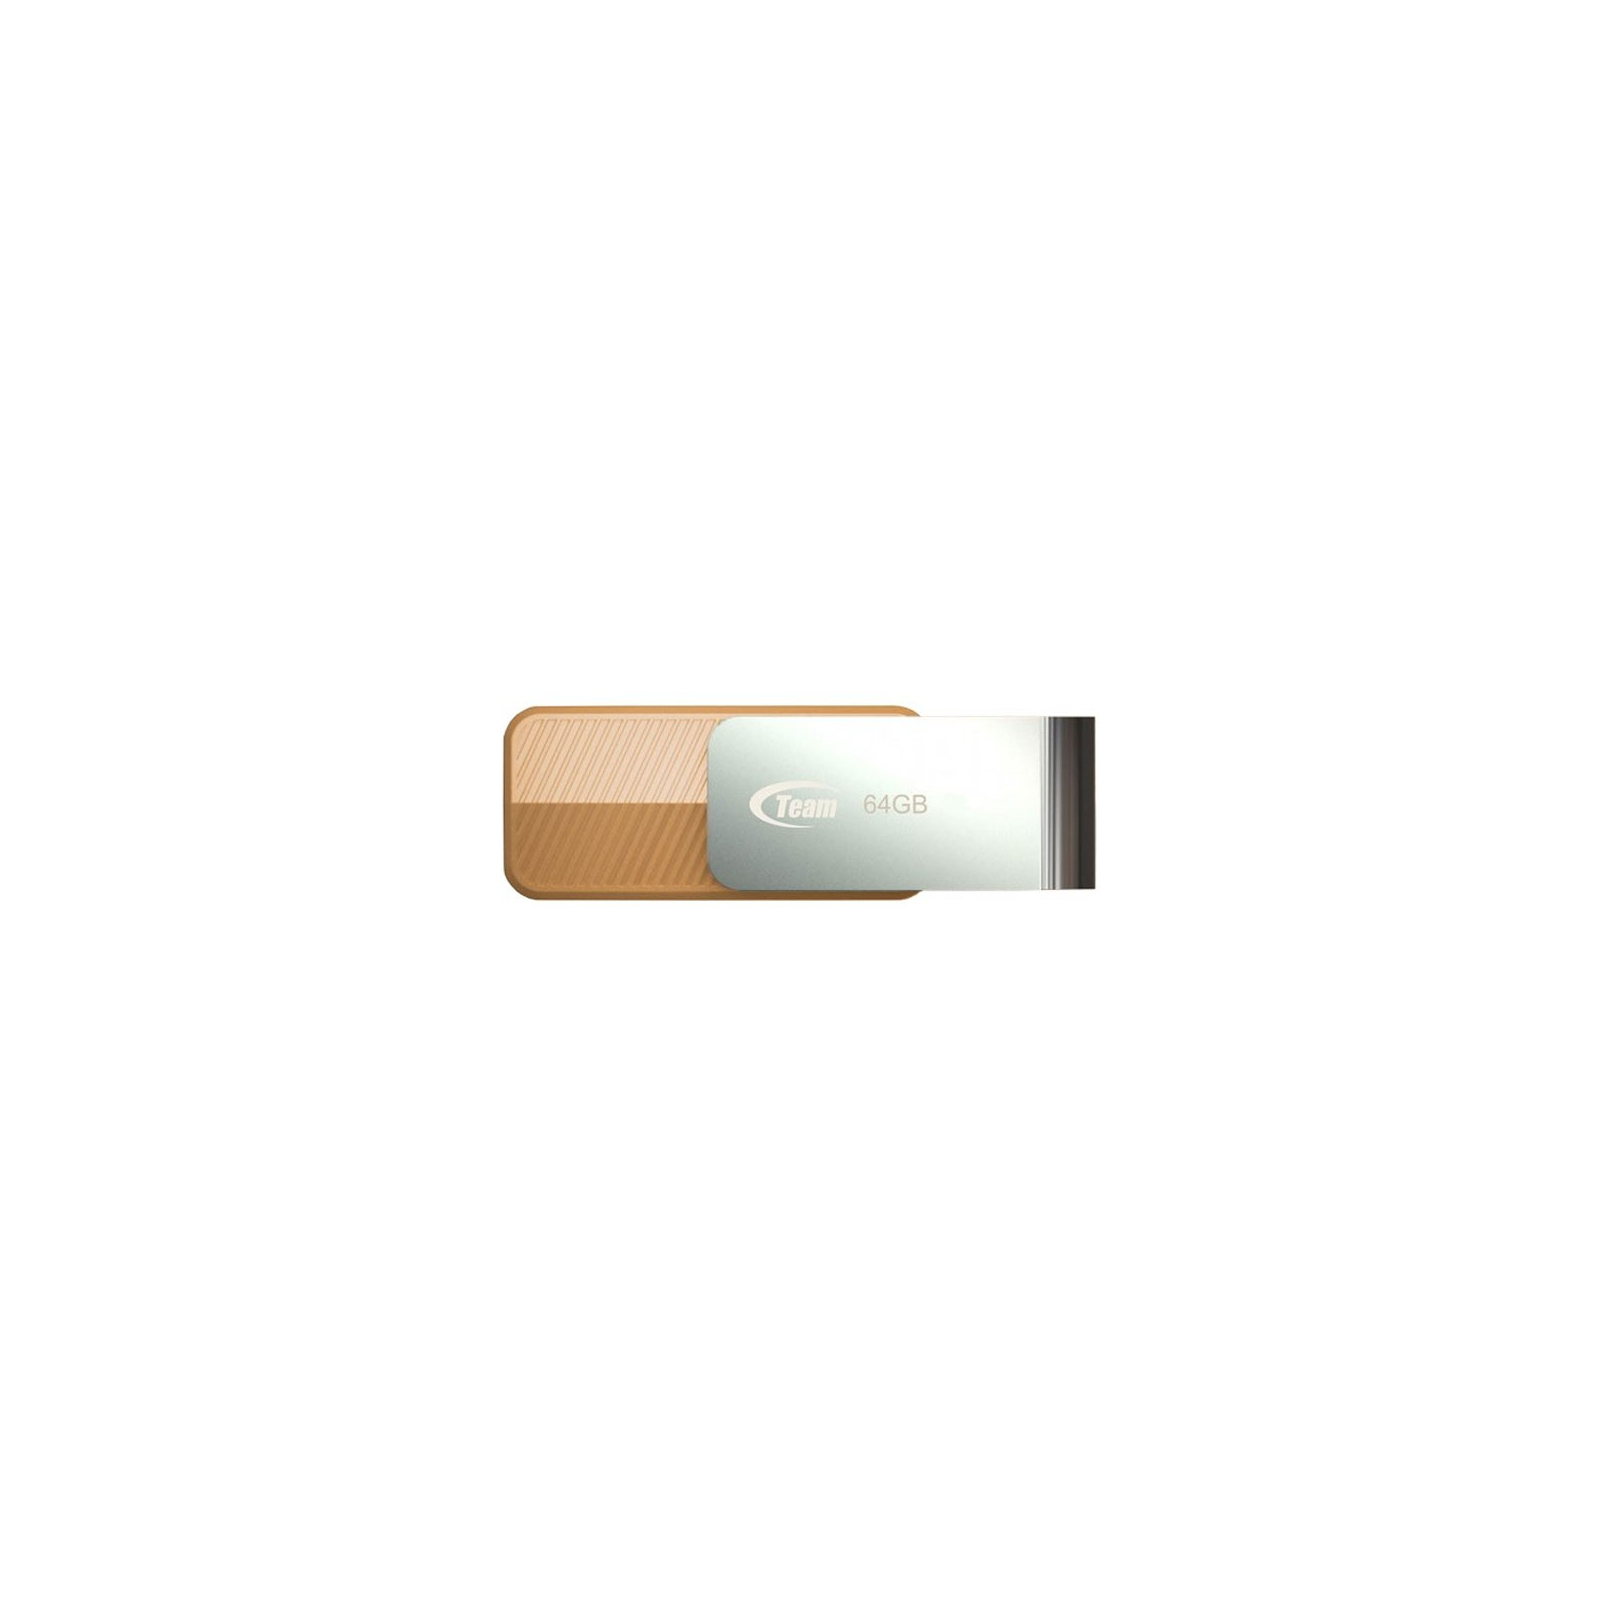 USB флеш накопитель Team 128GB C143 Brown USB 3.0 (TC1433128GN01)